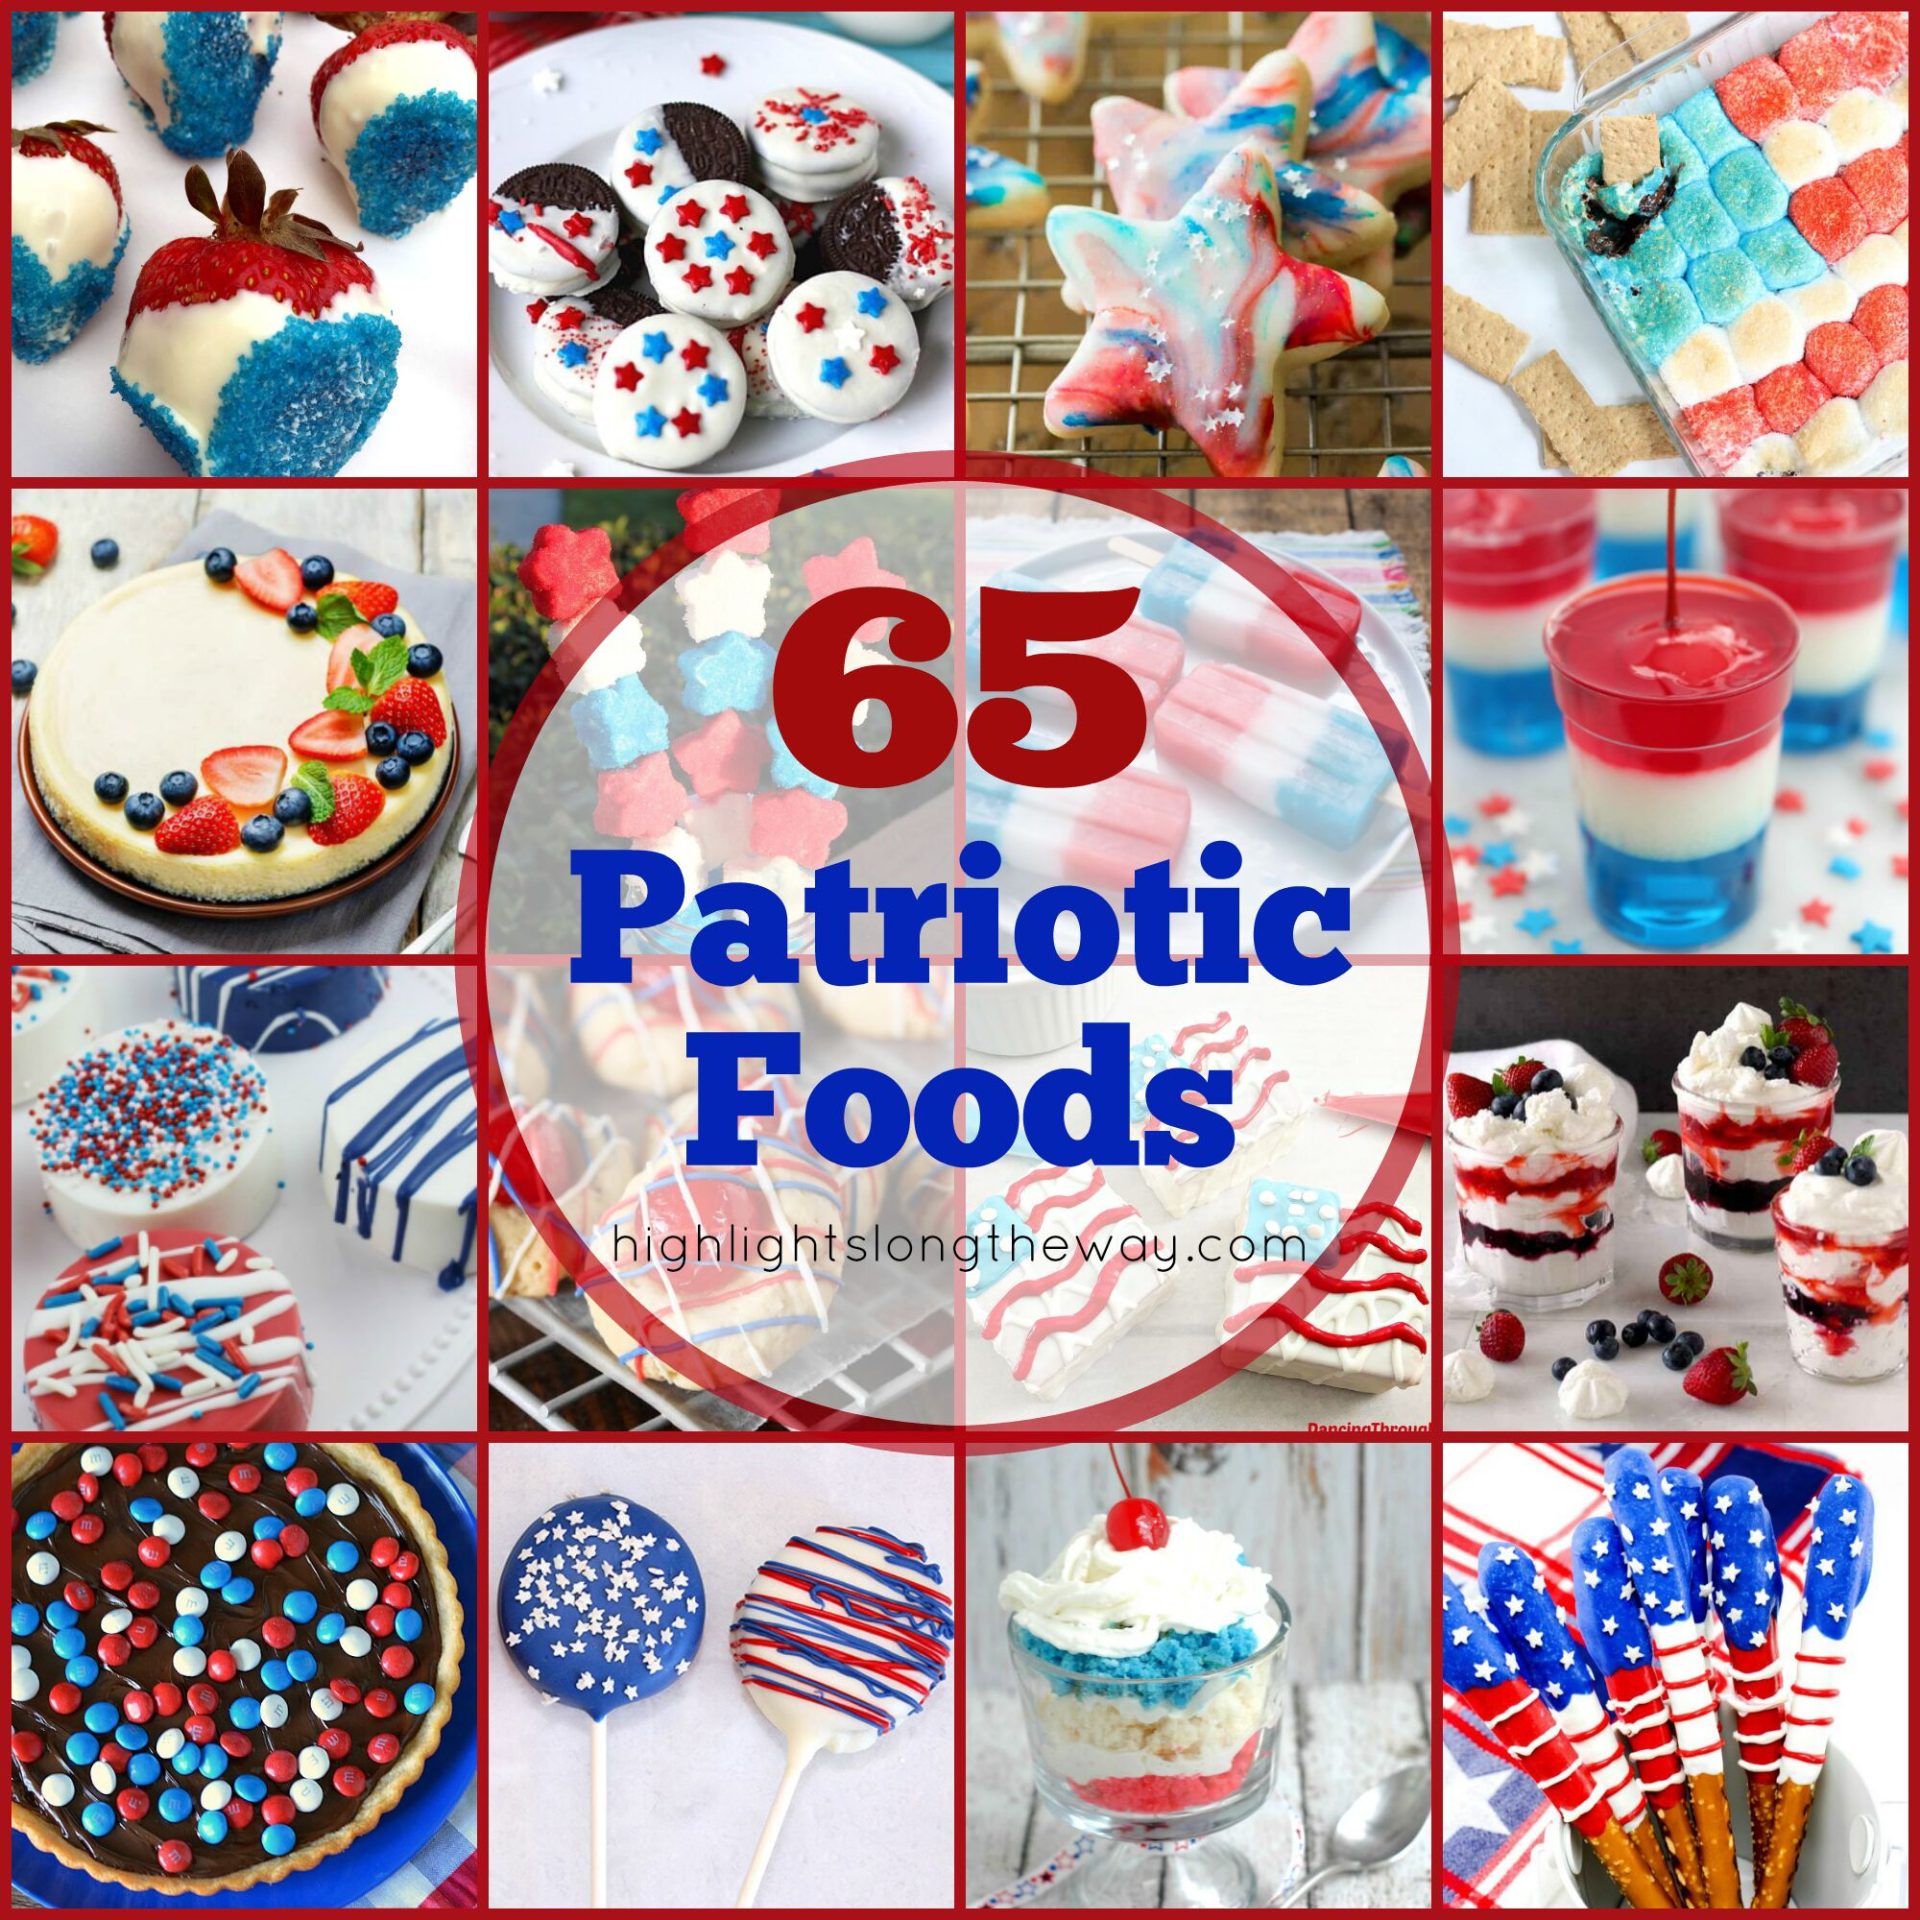 Patriotic food recipes